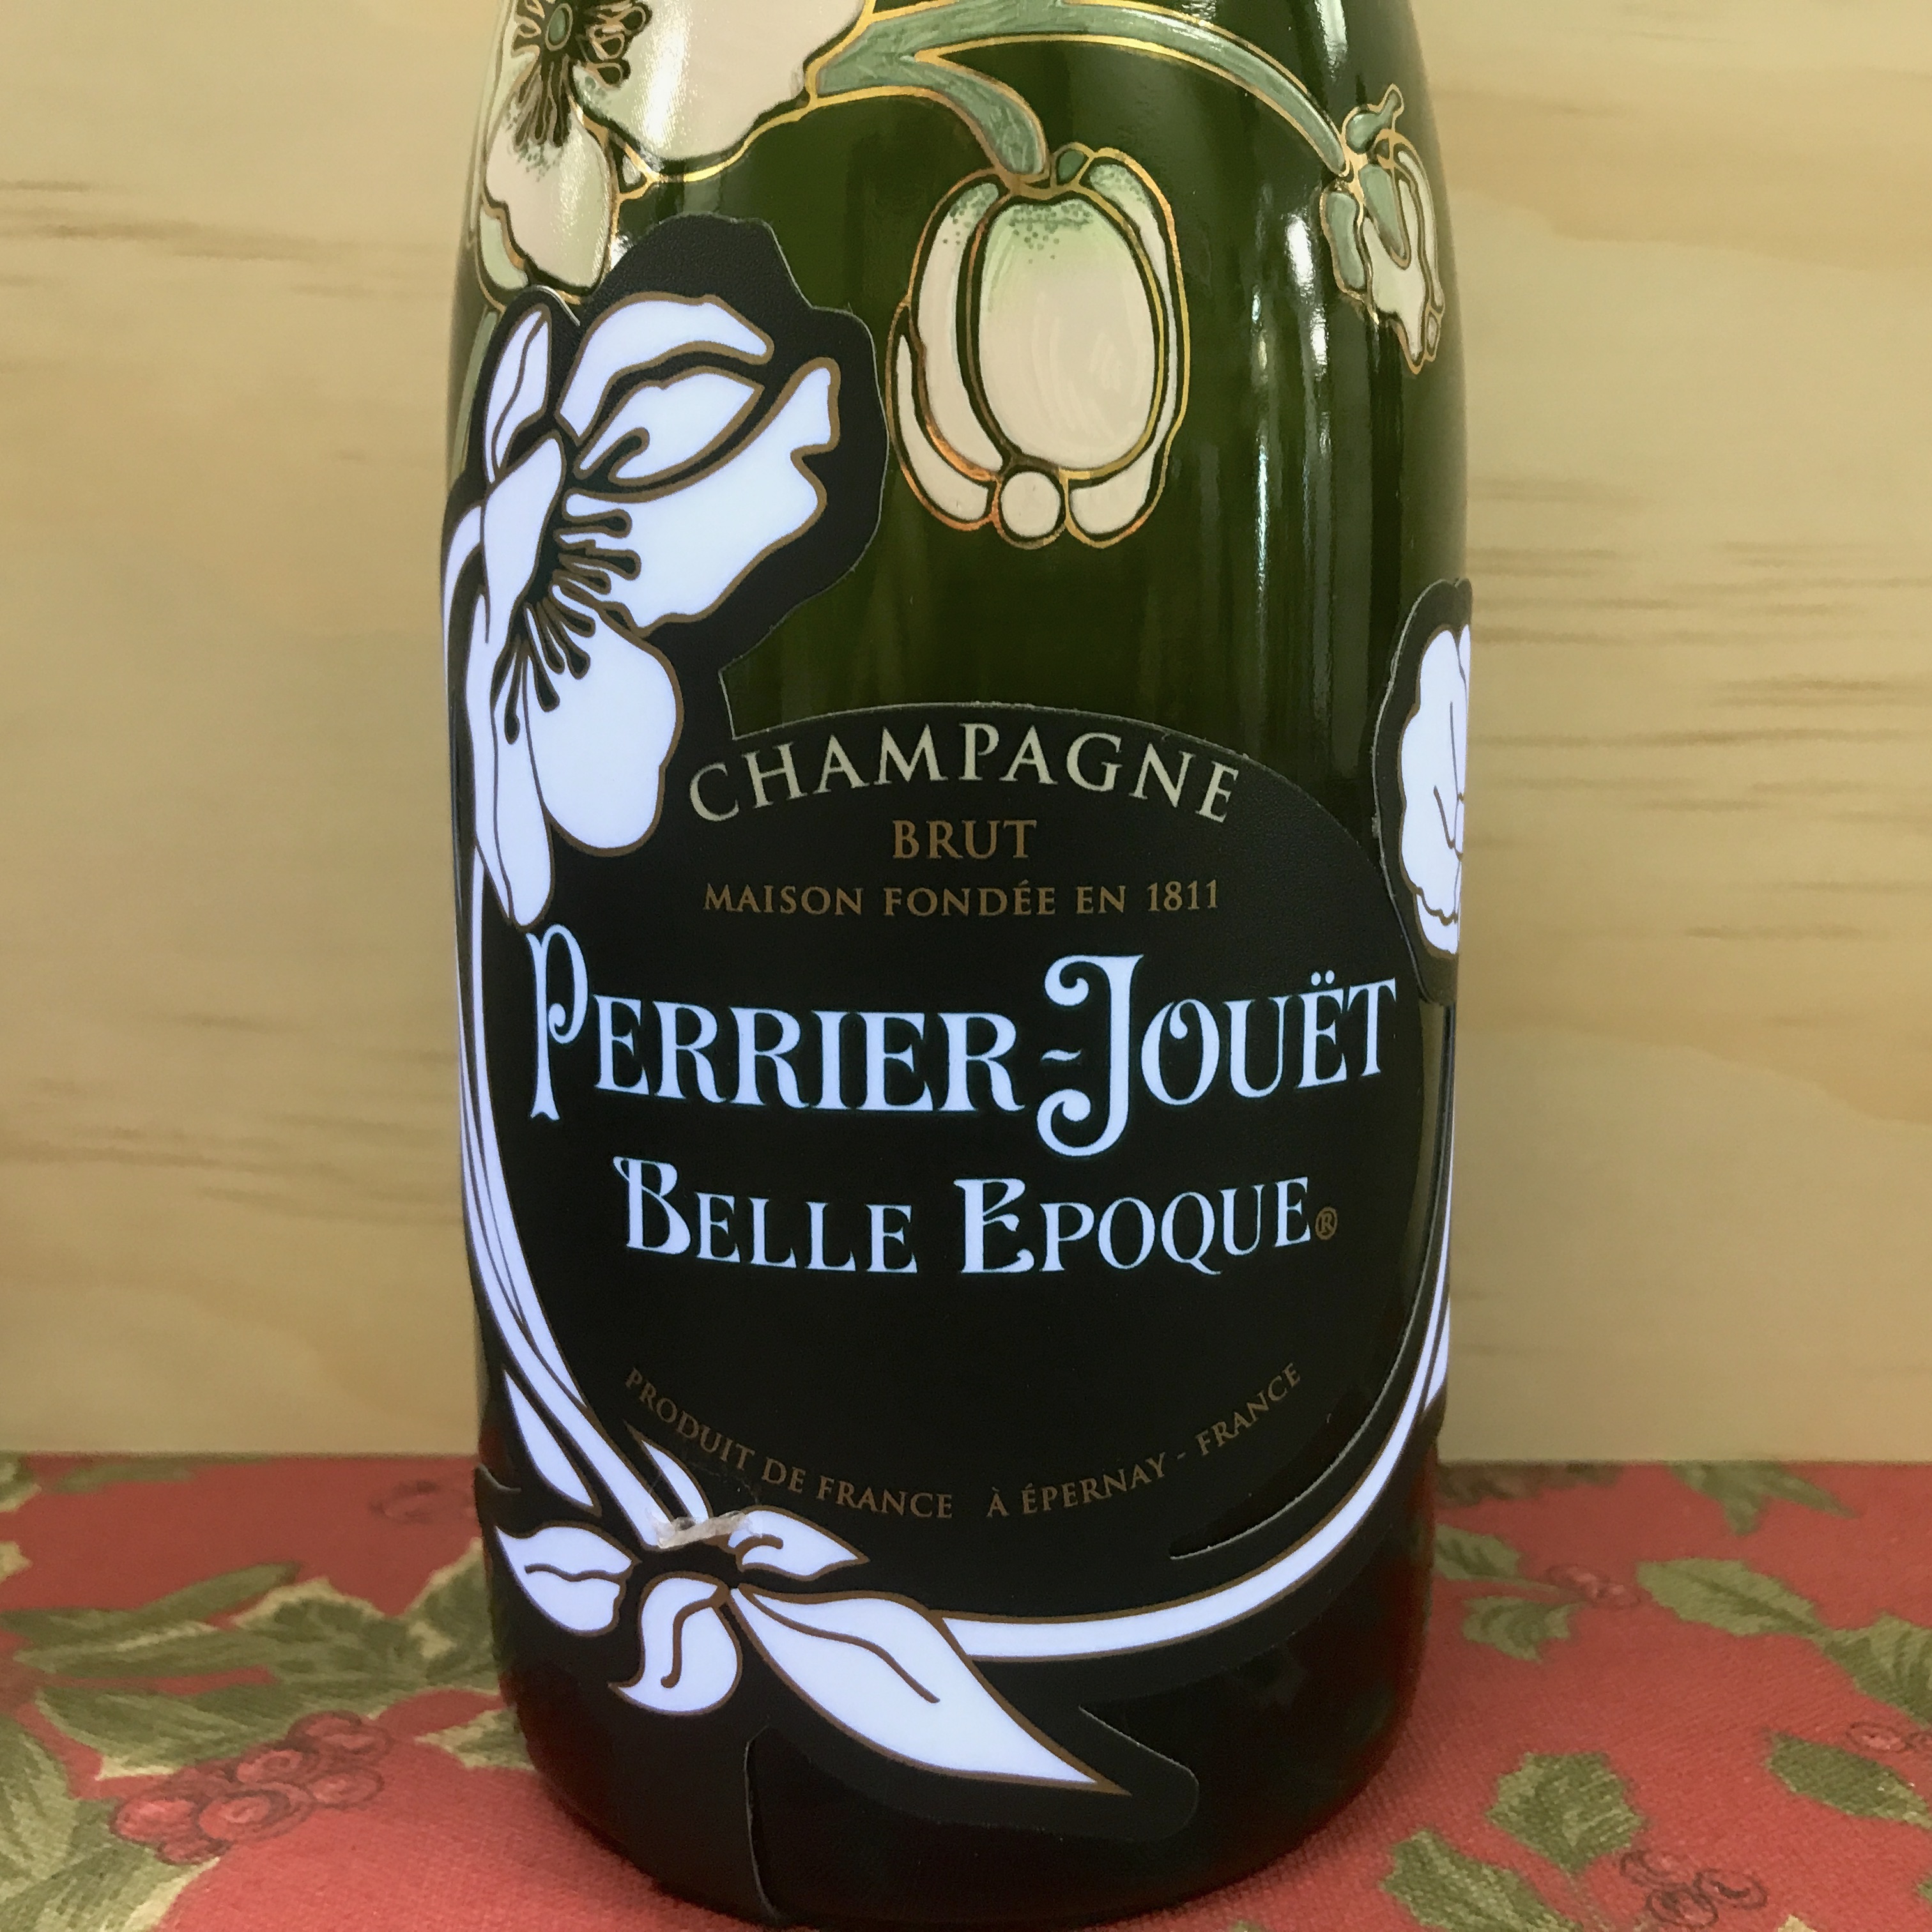 Perrier-Jouët Belle Epoque Brut Champagne 2013